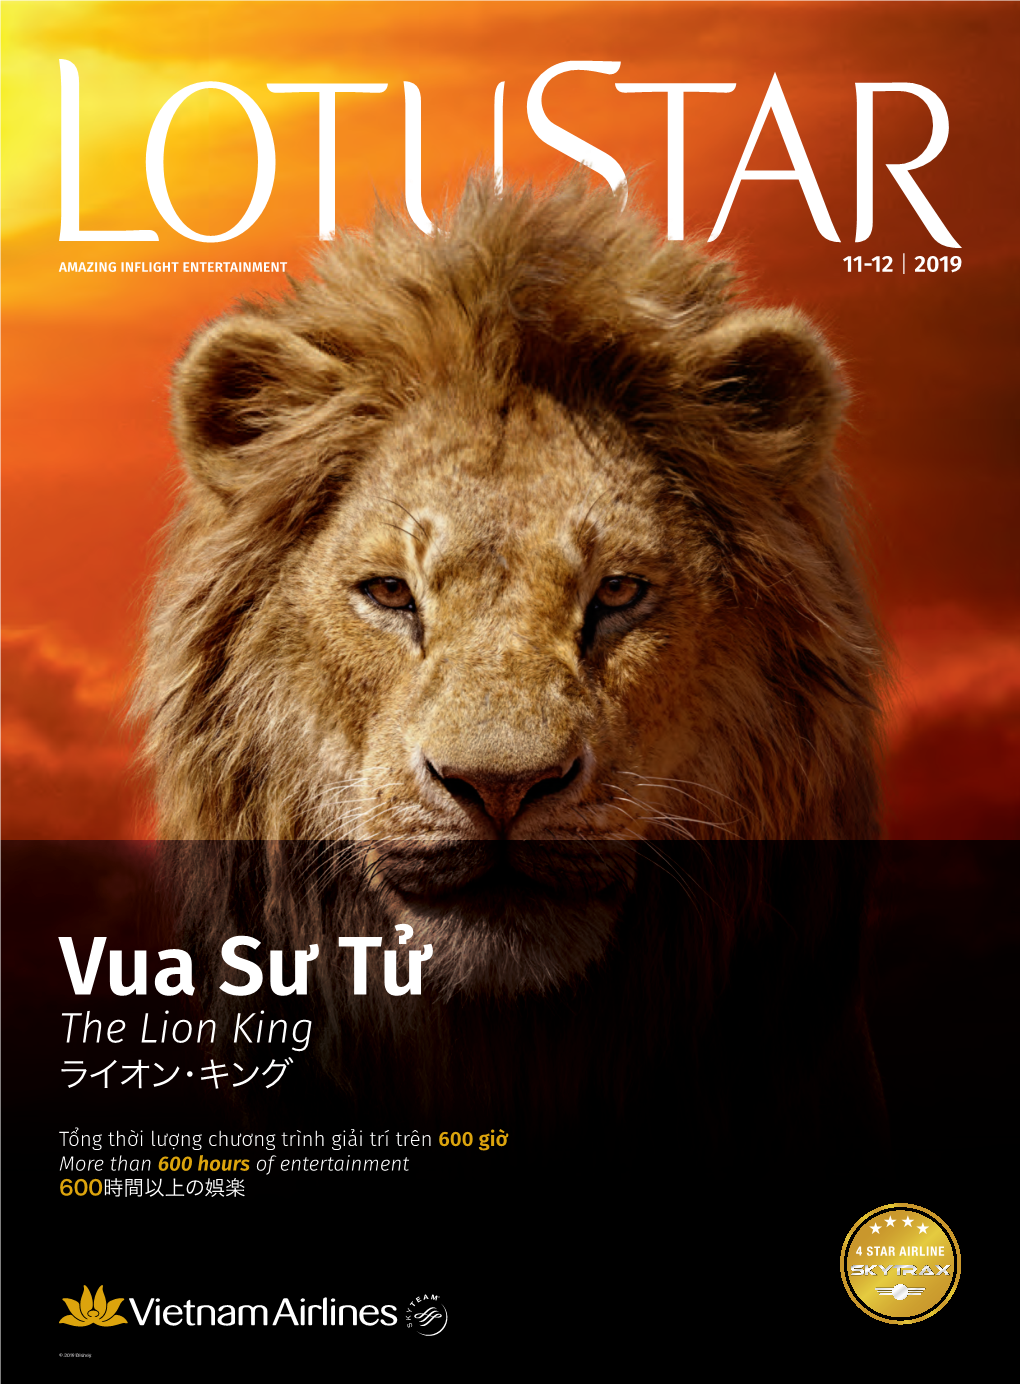 Vua Sư Tử the Lion King ライオン・キング